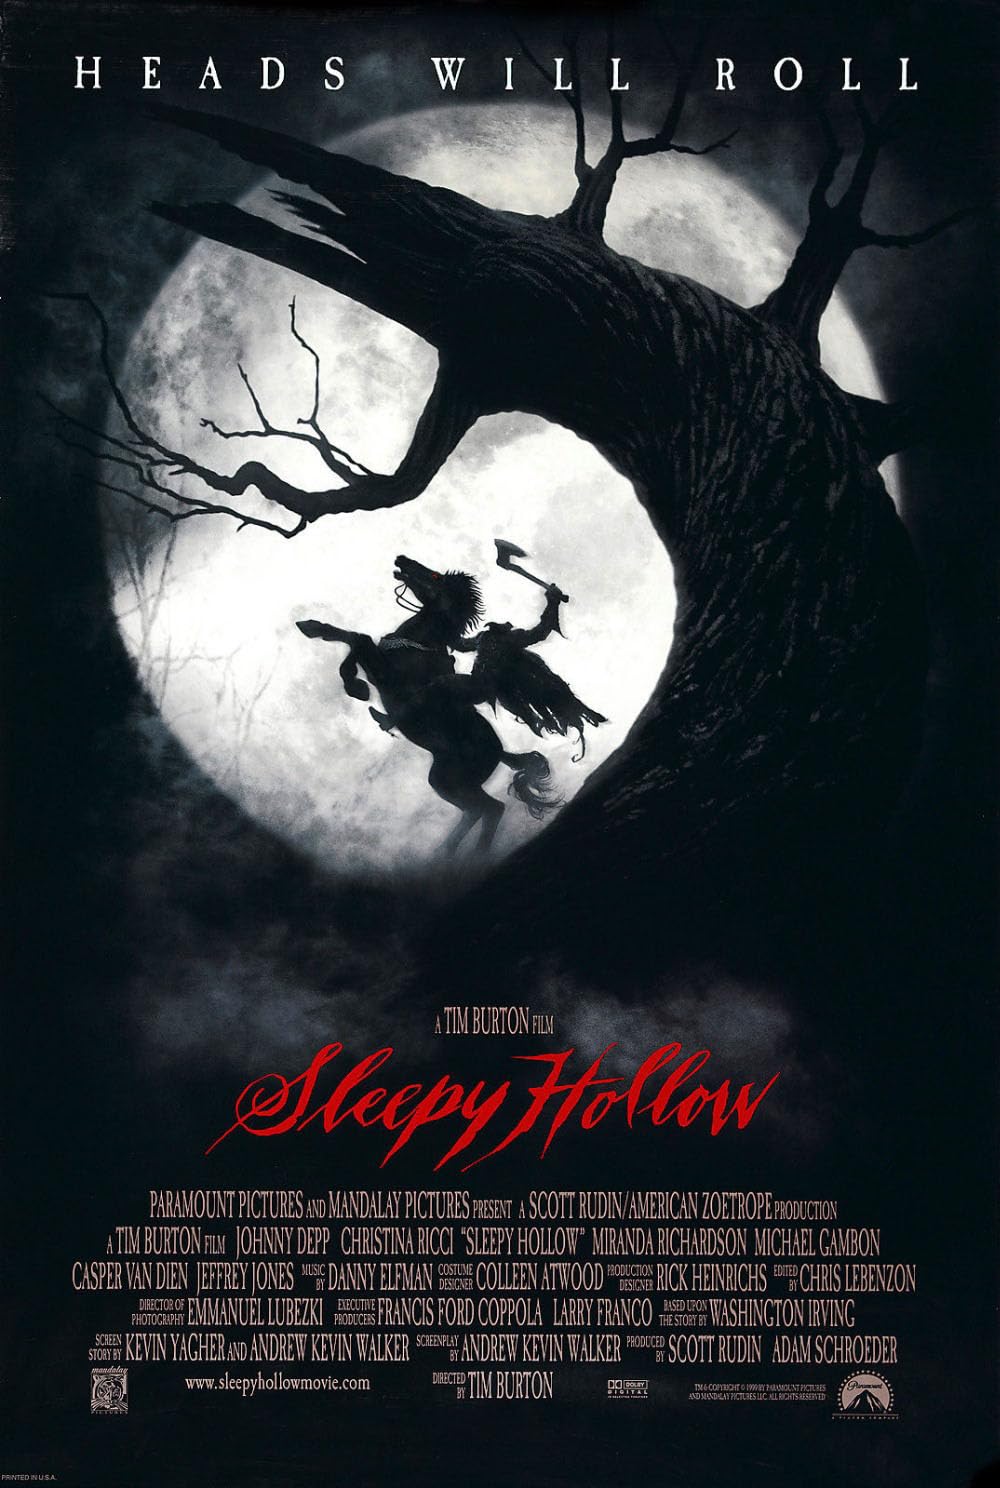 FULL MOVIE: Sleepy Hollow (1999)